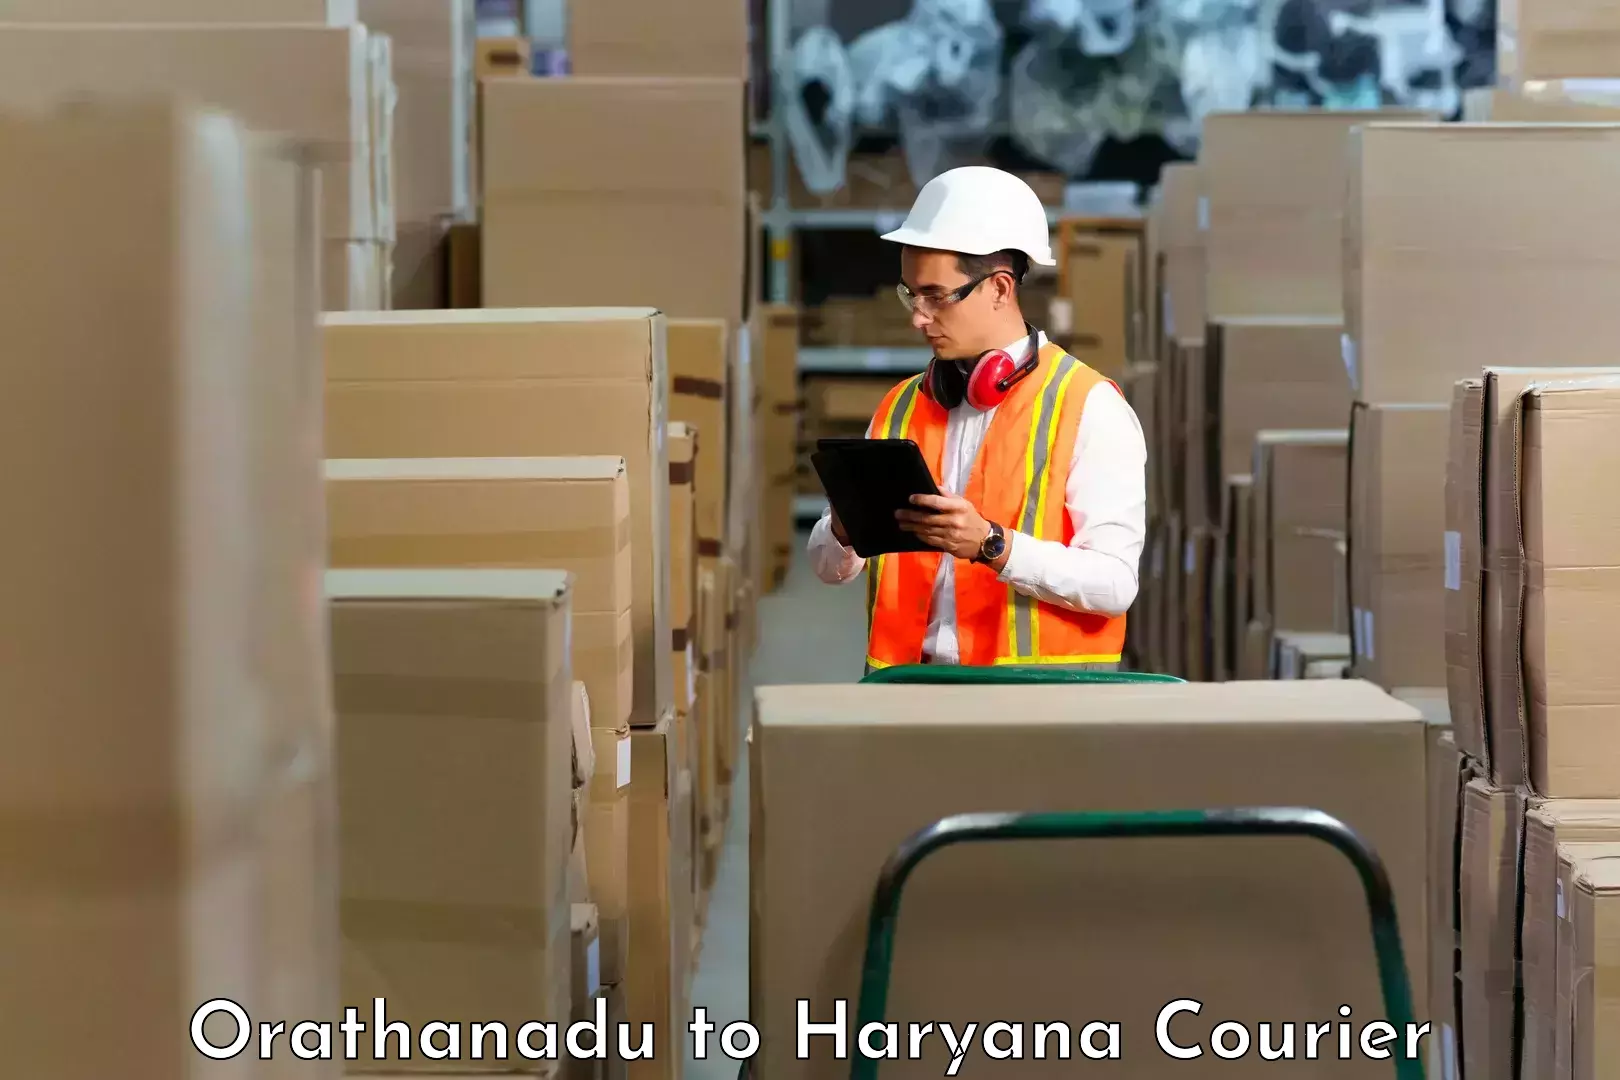 Courier service comparison Orathanadu to Haryana